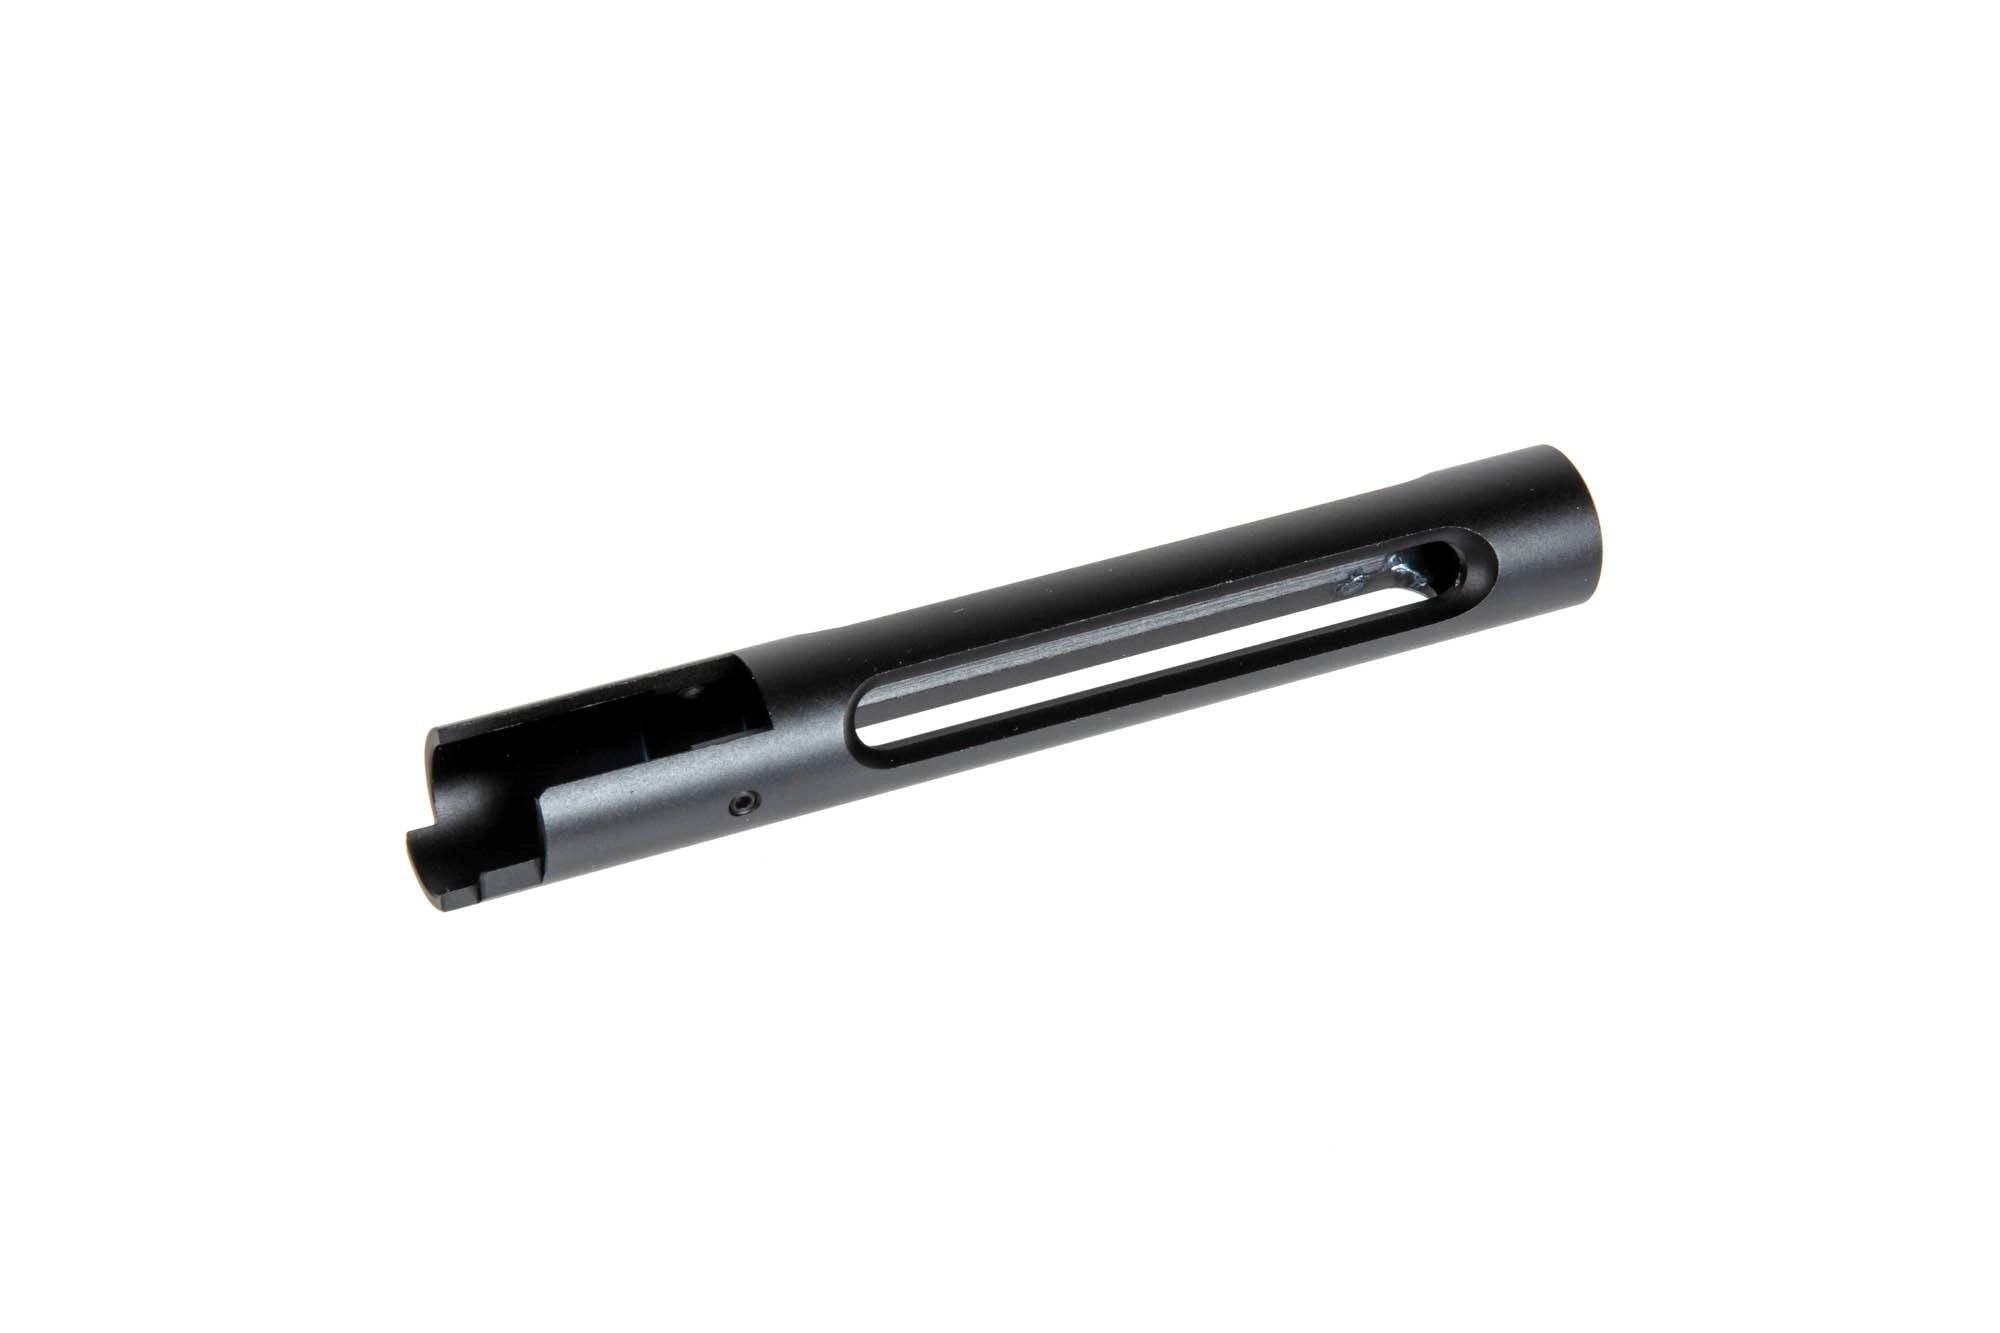 Outer, Non-Recoil barrel for Hi-Capa 5.1 airsoft pistols - black